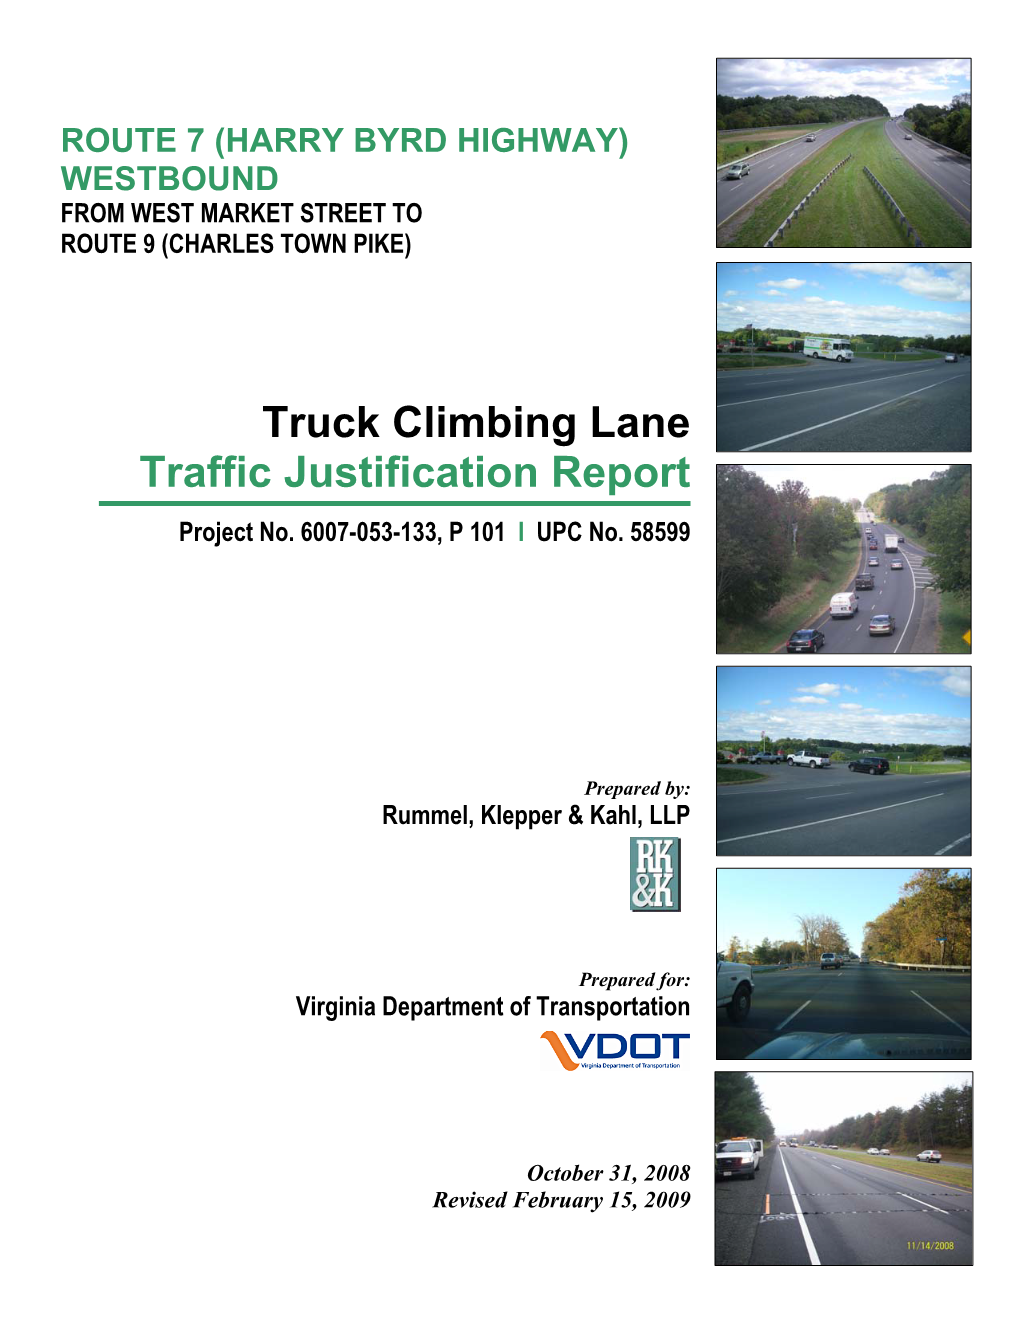 Truck Climbing Lane Traffic Justification Report Project No